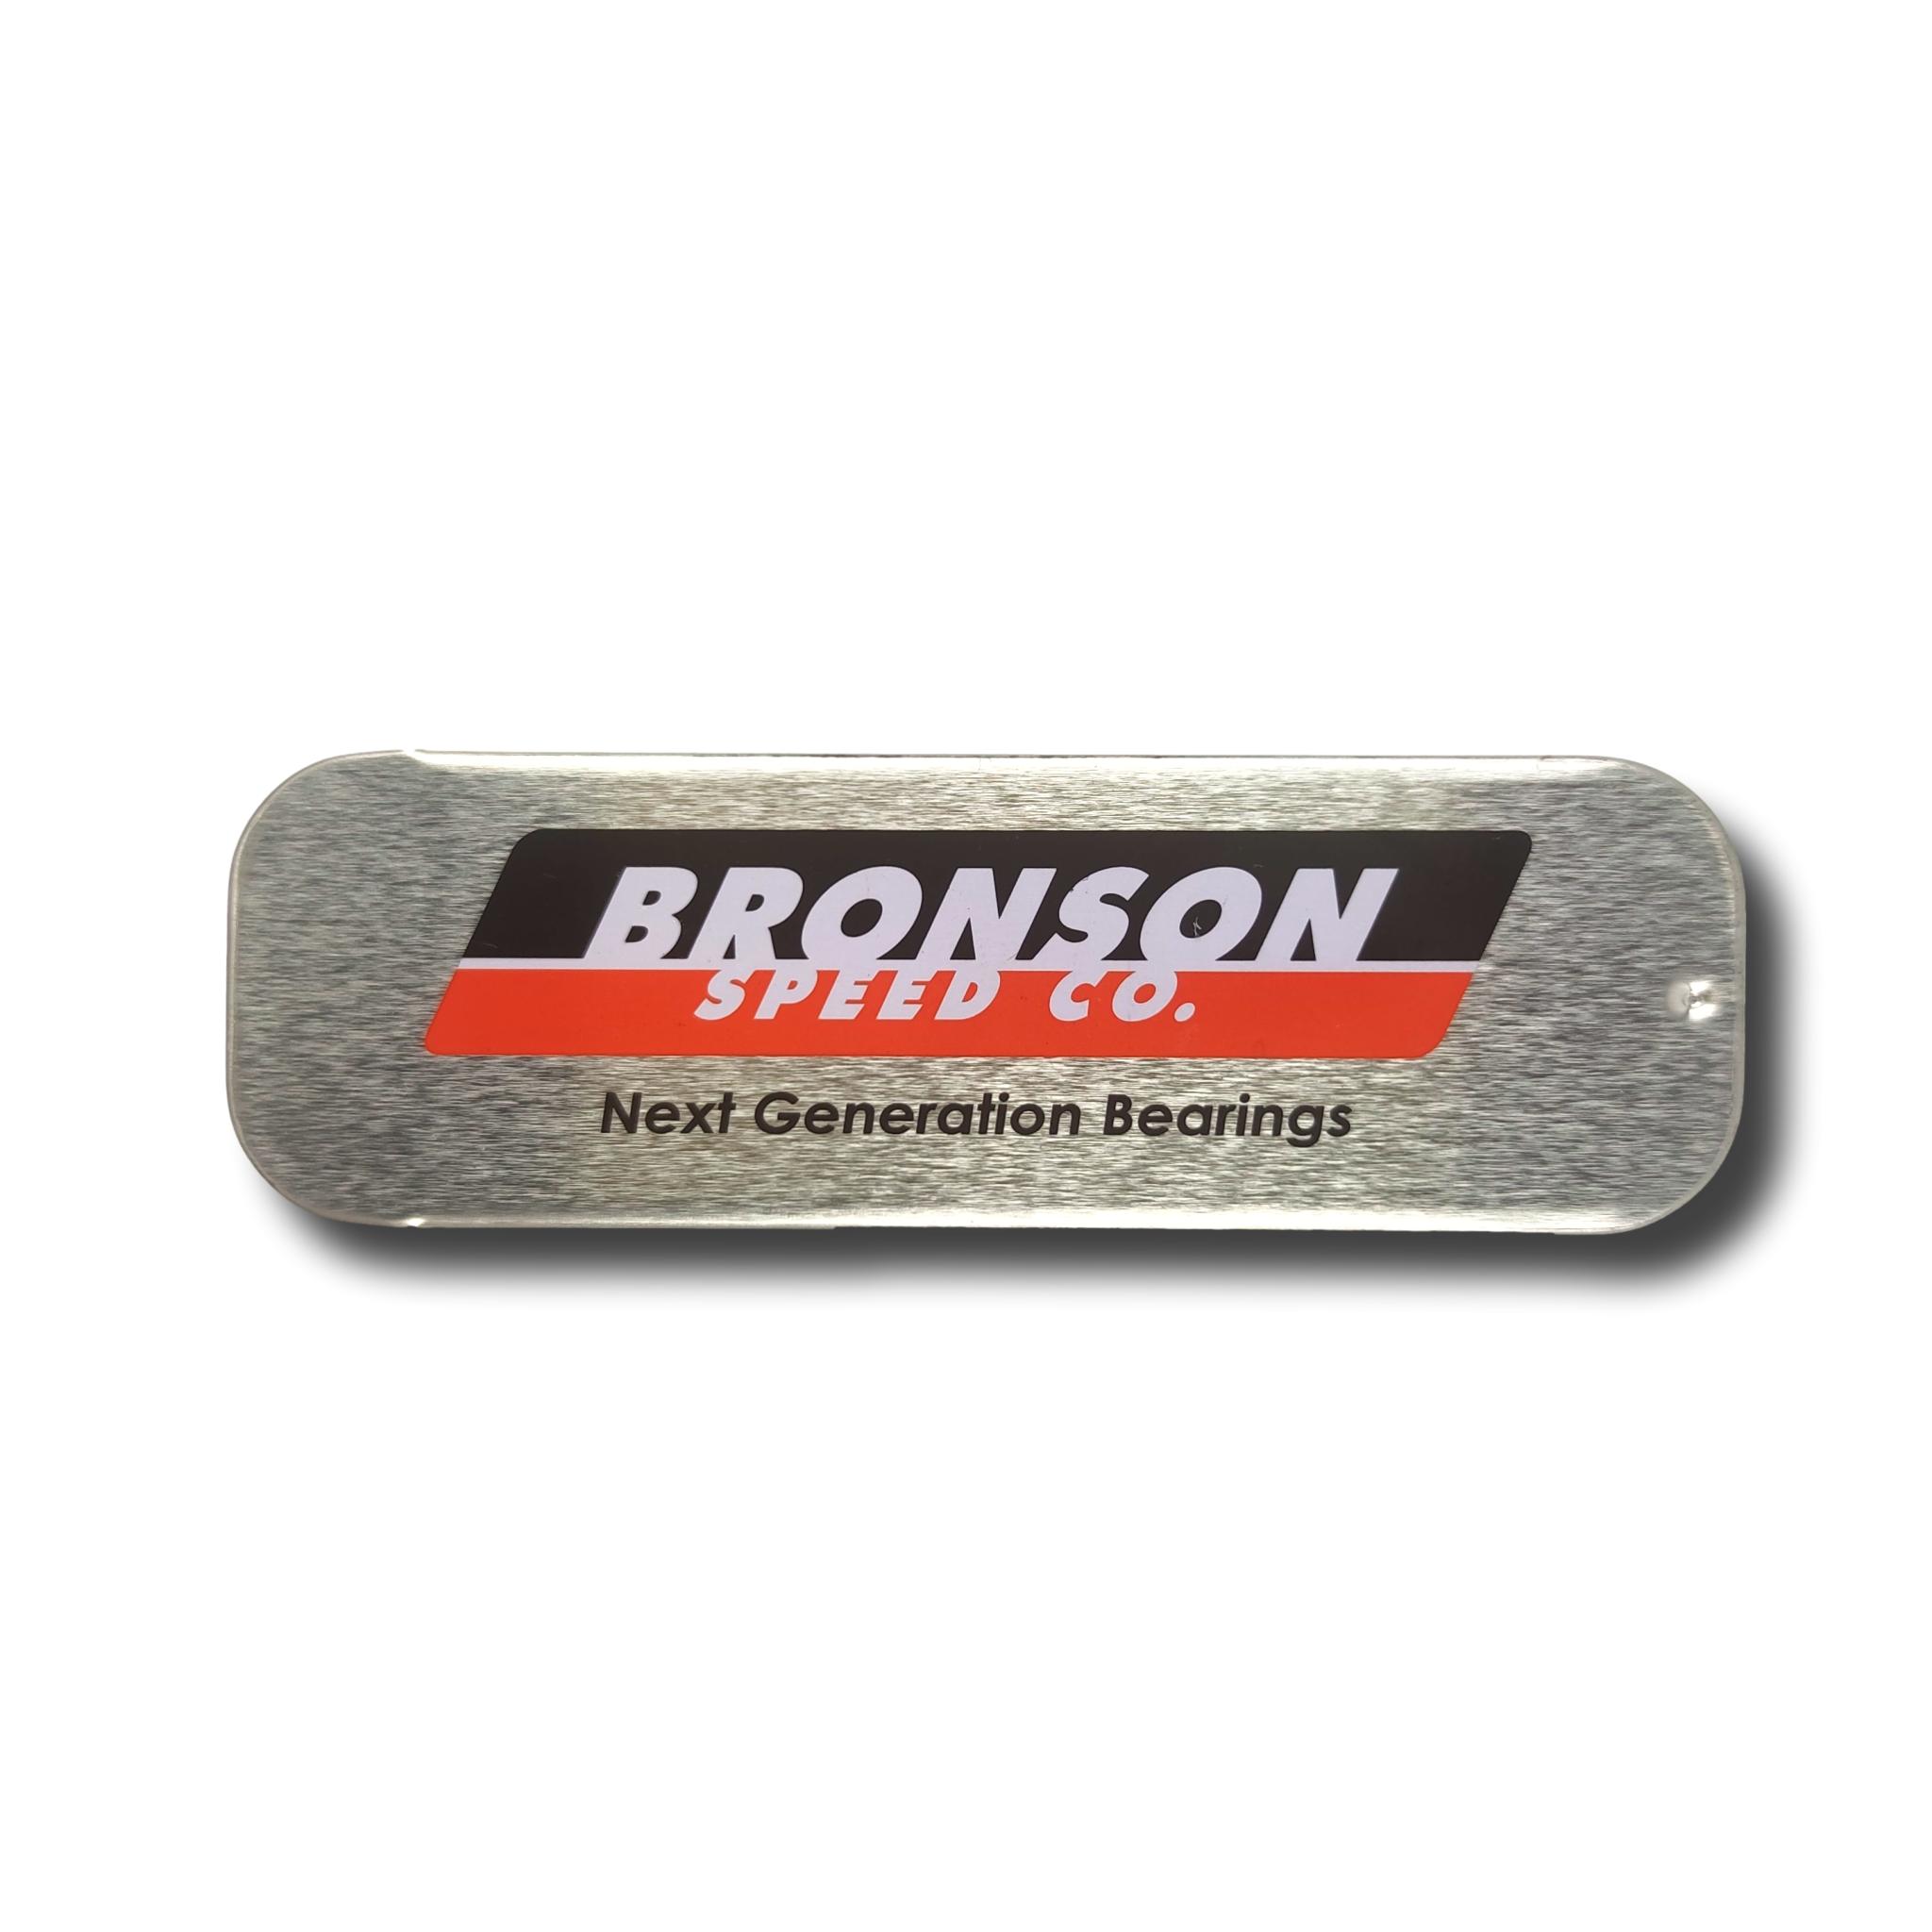 BRONSON SKATEBOARD BEARINGS G3 SPEED CO. NEXT GENERATION